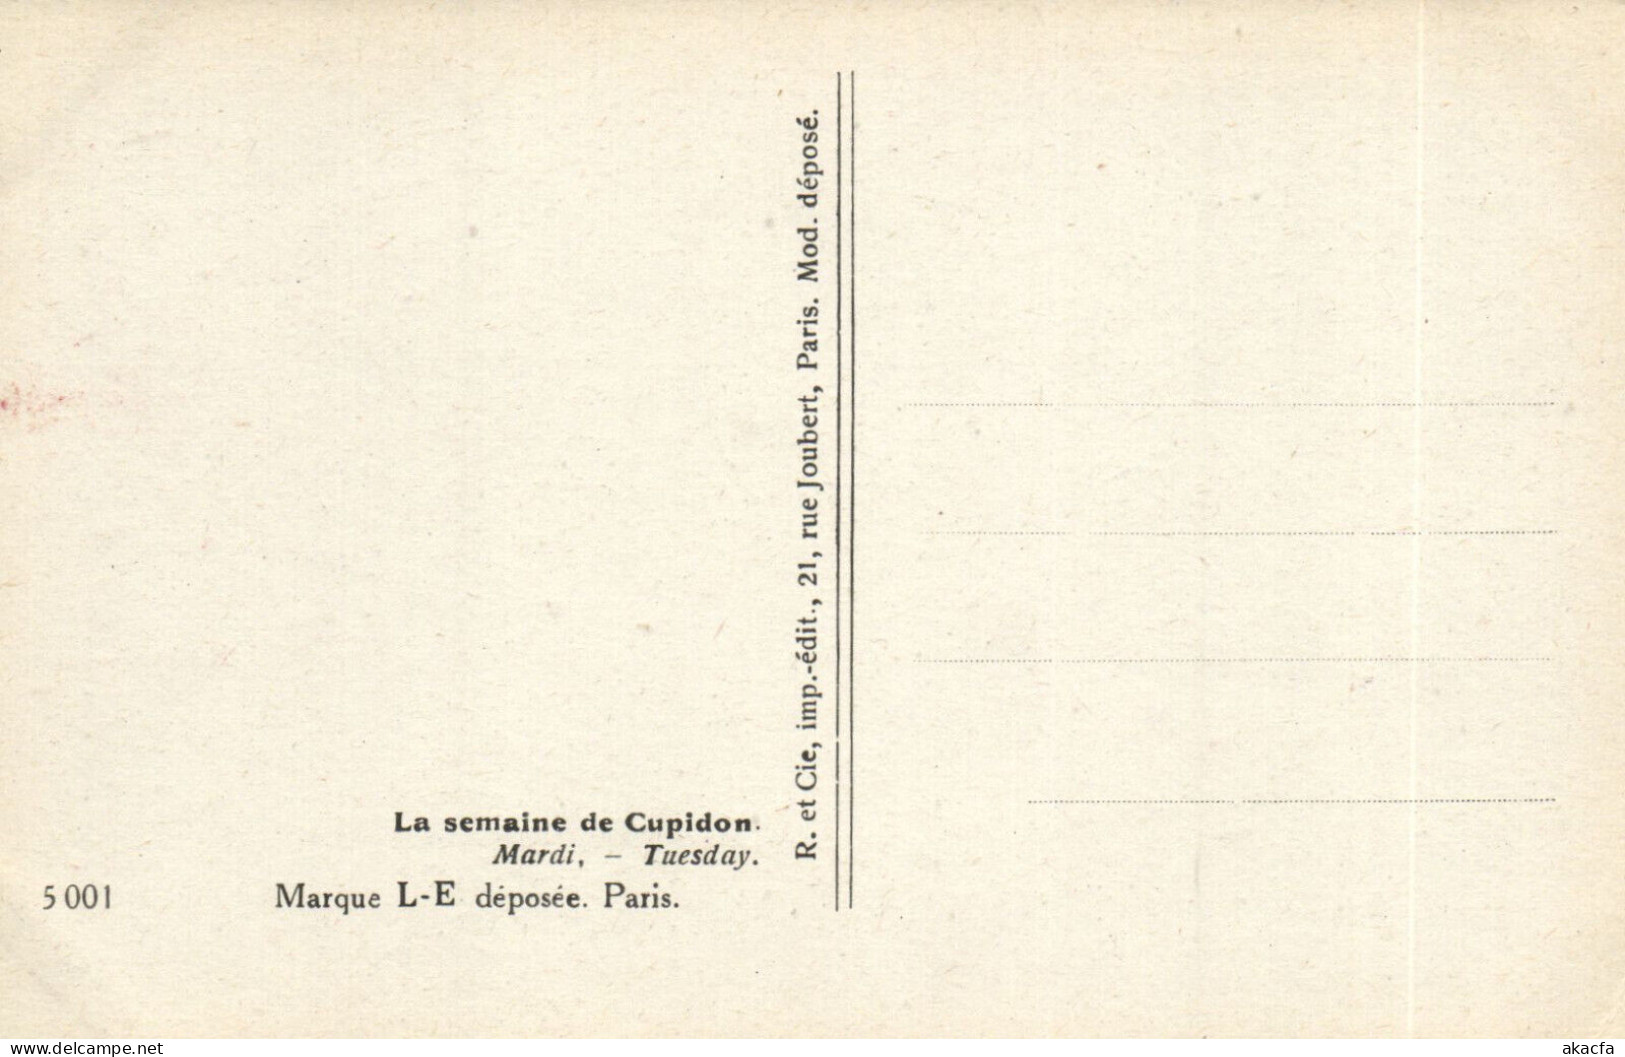 PC ARTIST SIGNED, MEUNIER, RISQUE, SEMAINE DE CUPIDON, Vintage Postcard (b50642) - Meunier, S.